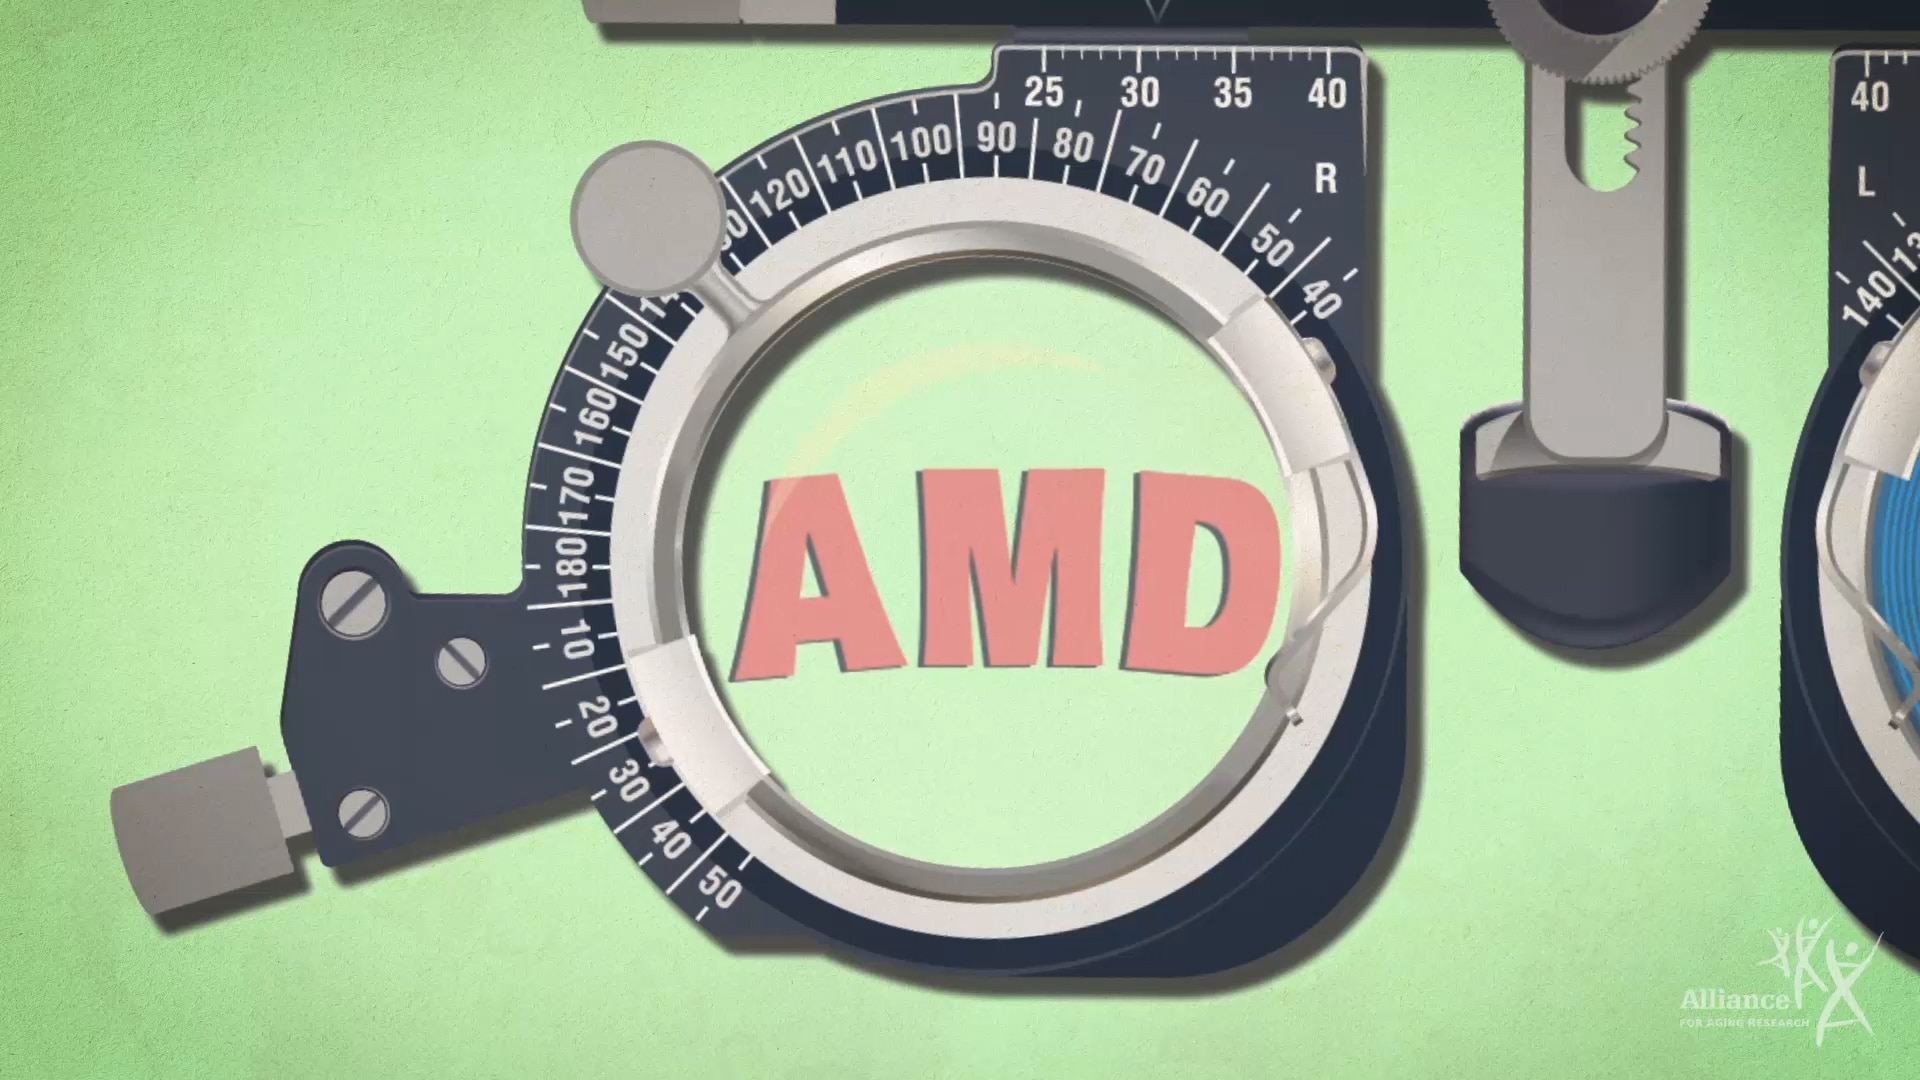 Eye exam equipment with text "AMD."